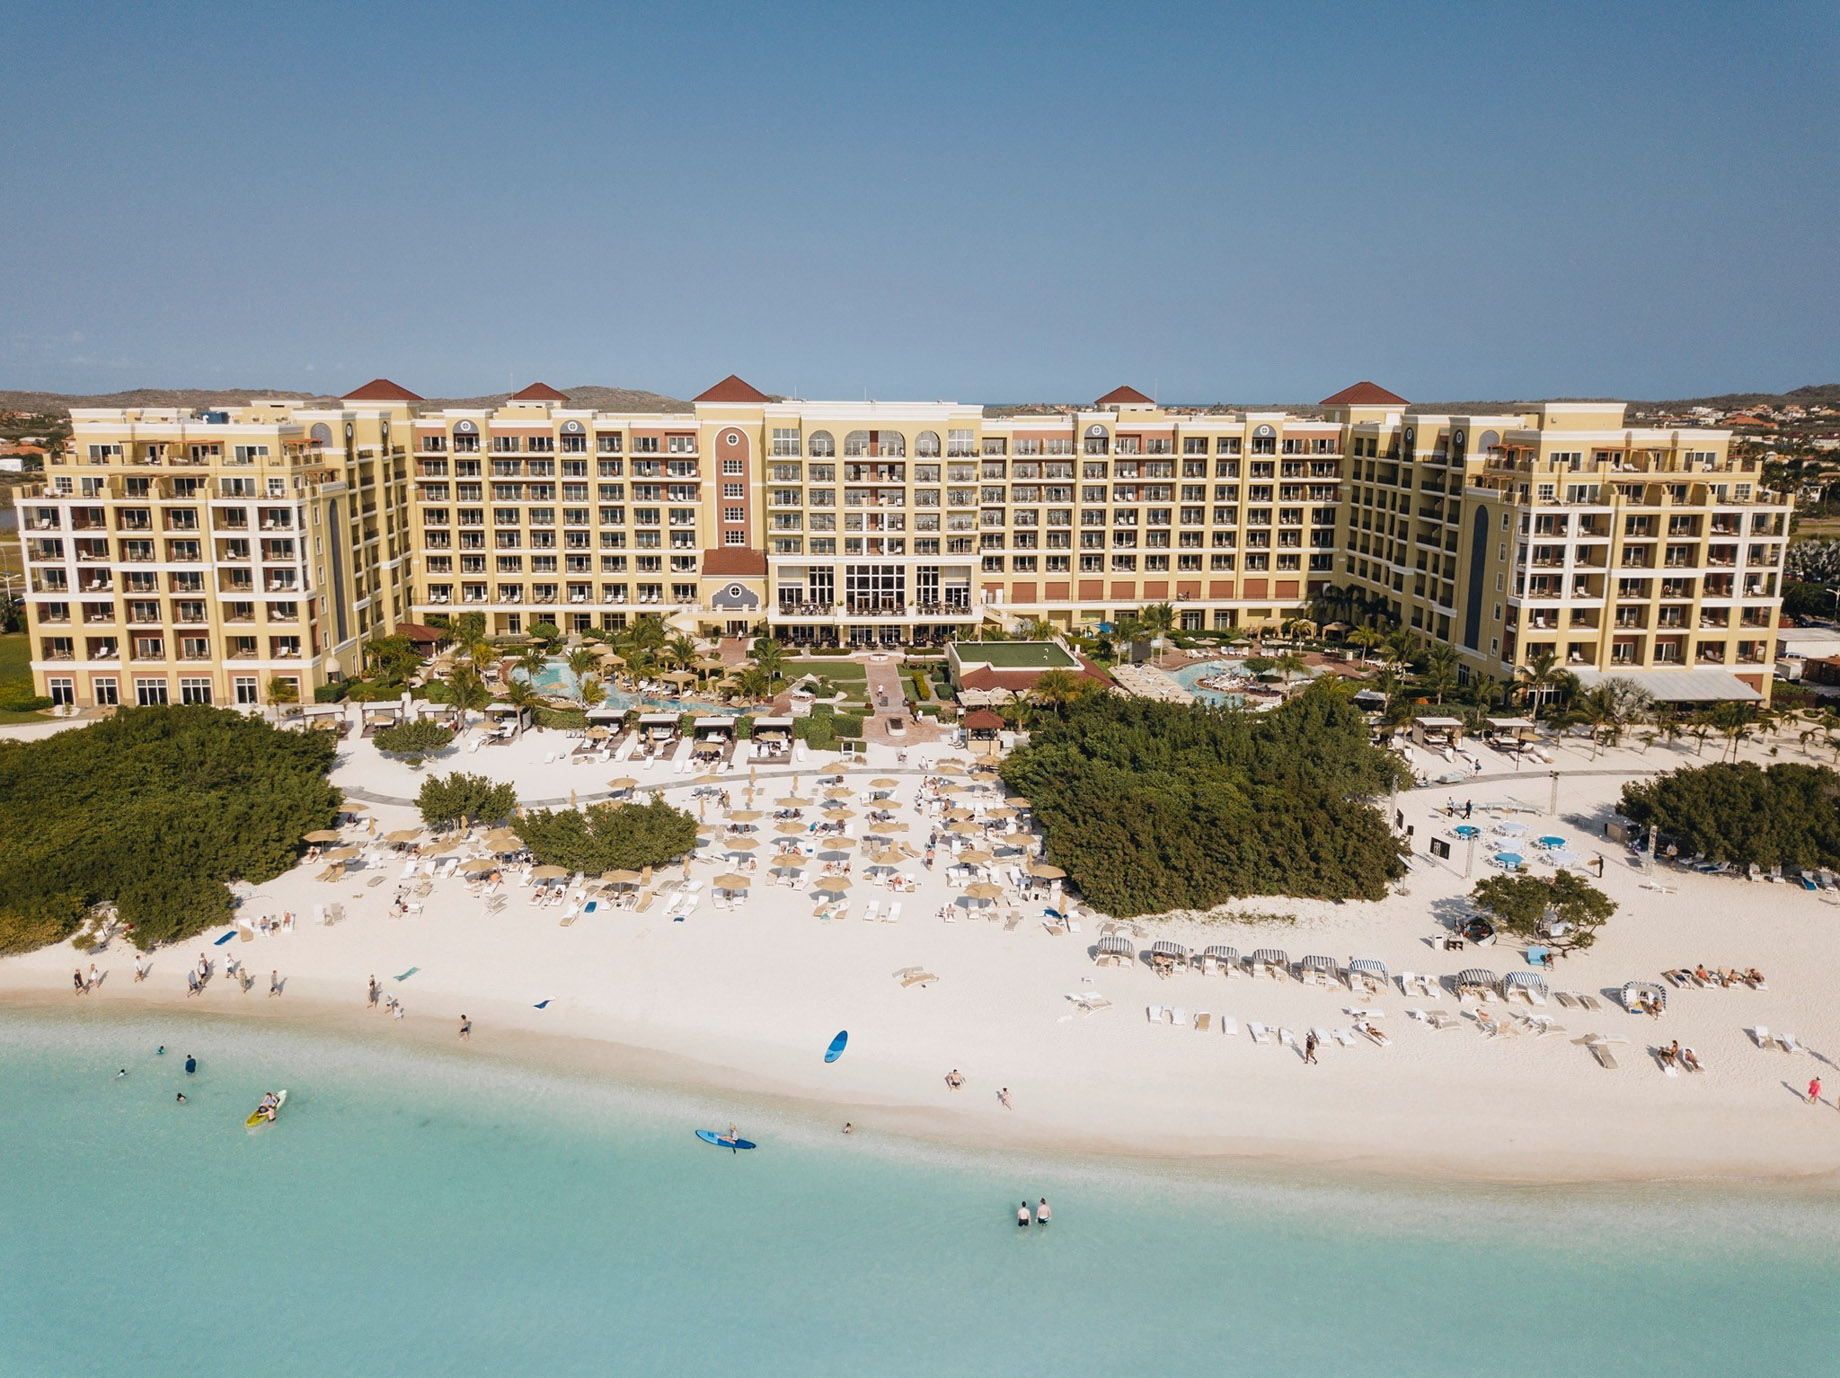 The Ritz-Carlton, Aruba Resort - Palm Beach, Aruba - Exterior Aerial Property View